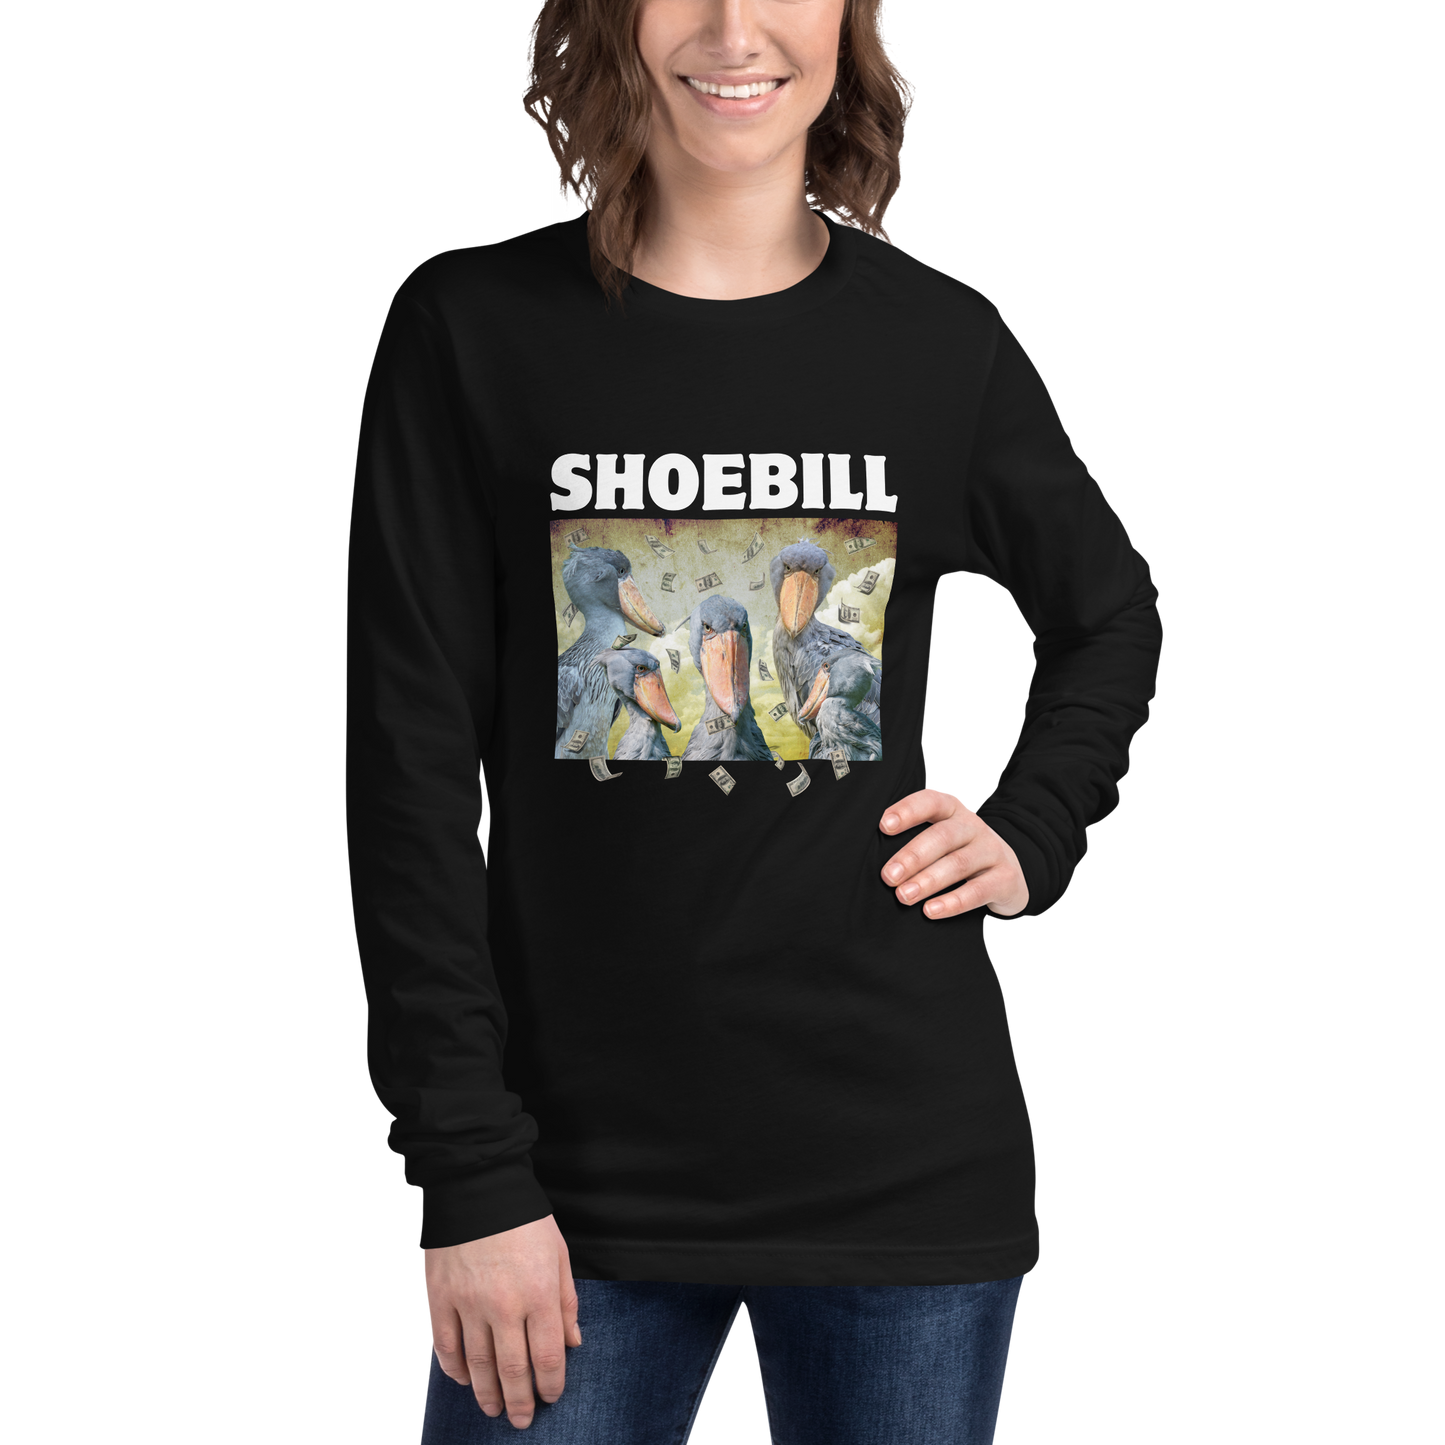 Woman wearing a Black Shoebill Stork Long Sleeve Tee featuring cool Shoebill graphic on the chest - Artsy/Funny Shoebill Stork Long Sleeve Graphic Tees - Boozy Fox